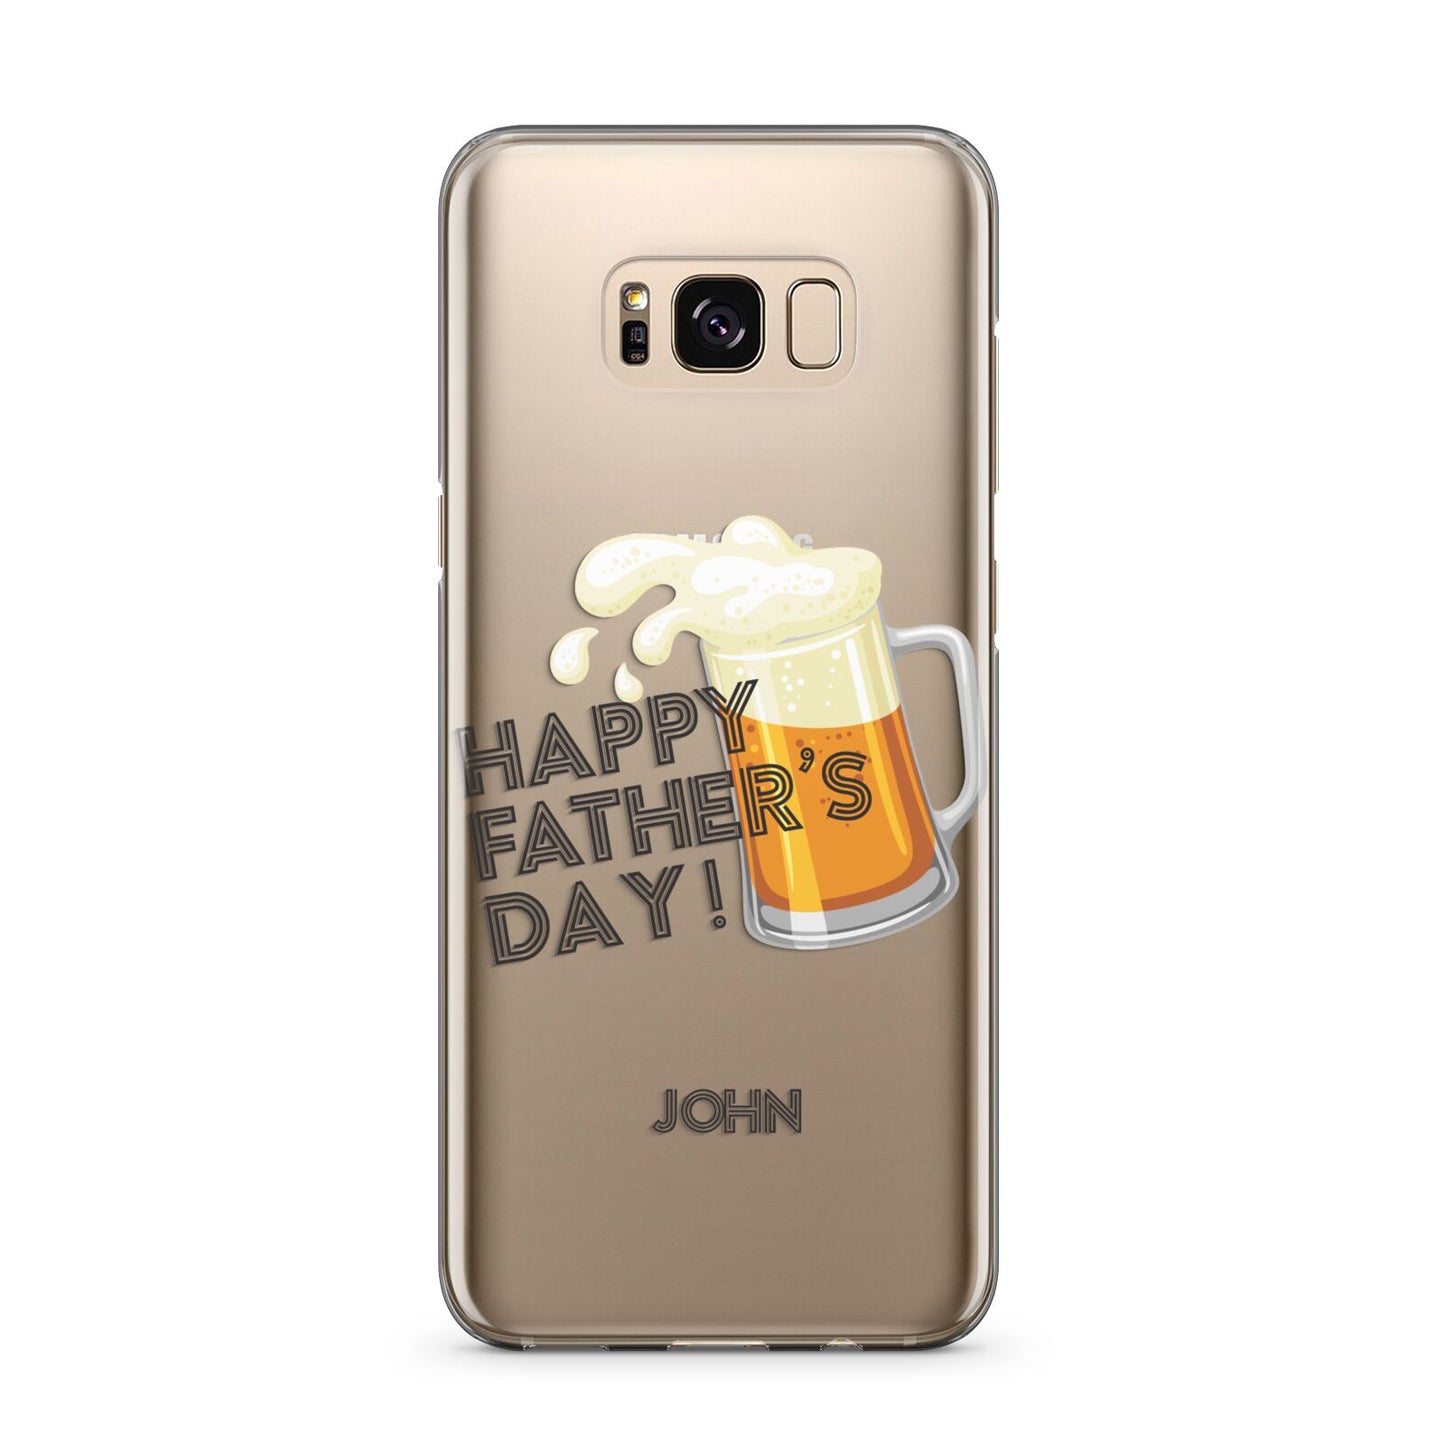 Fathers Day Custom Samsung Galaxy S8 Plus Case